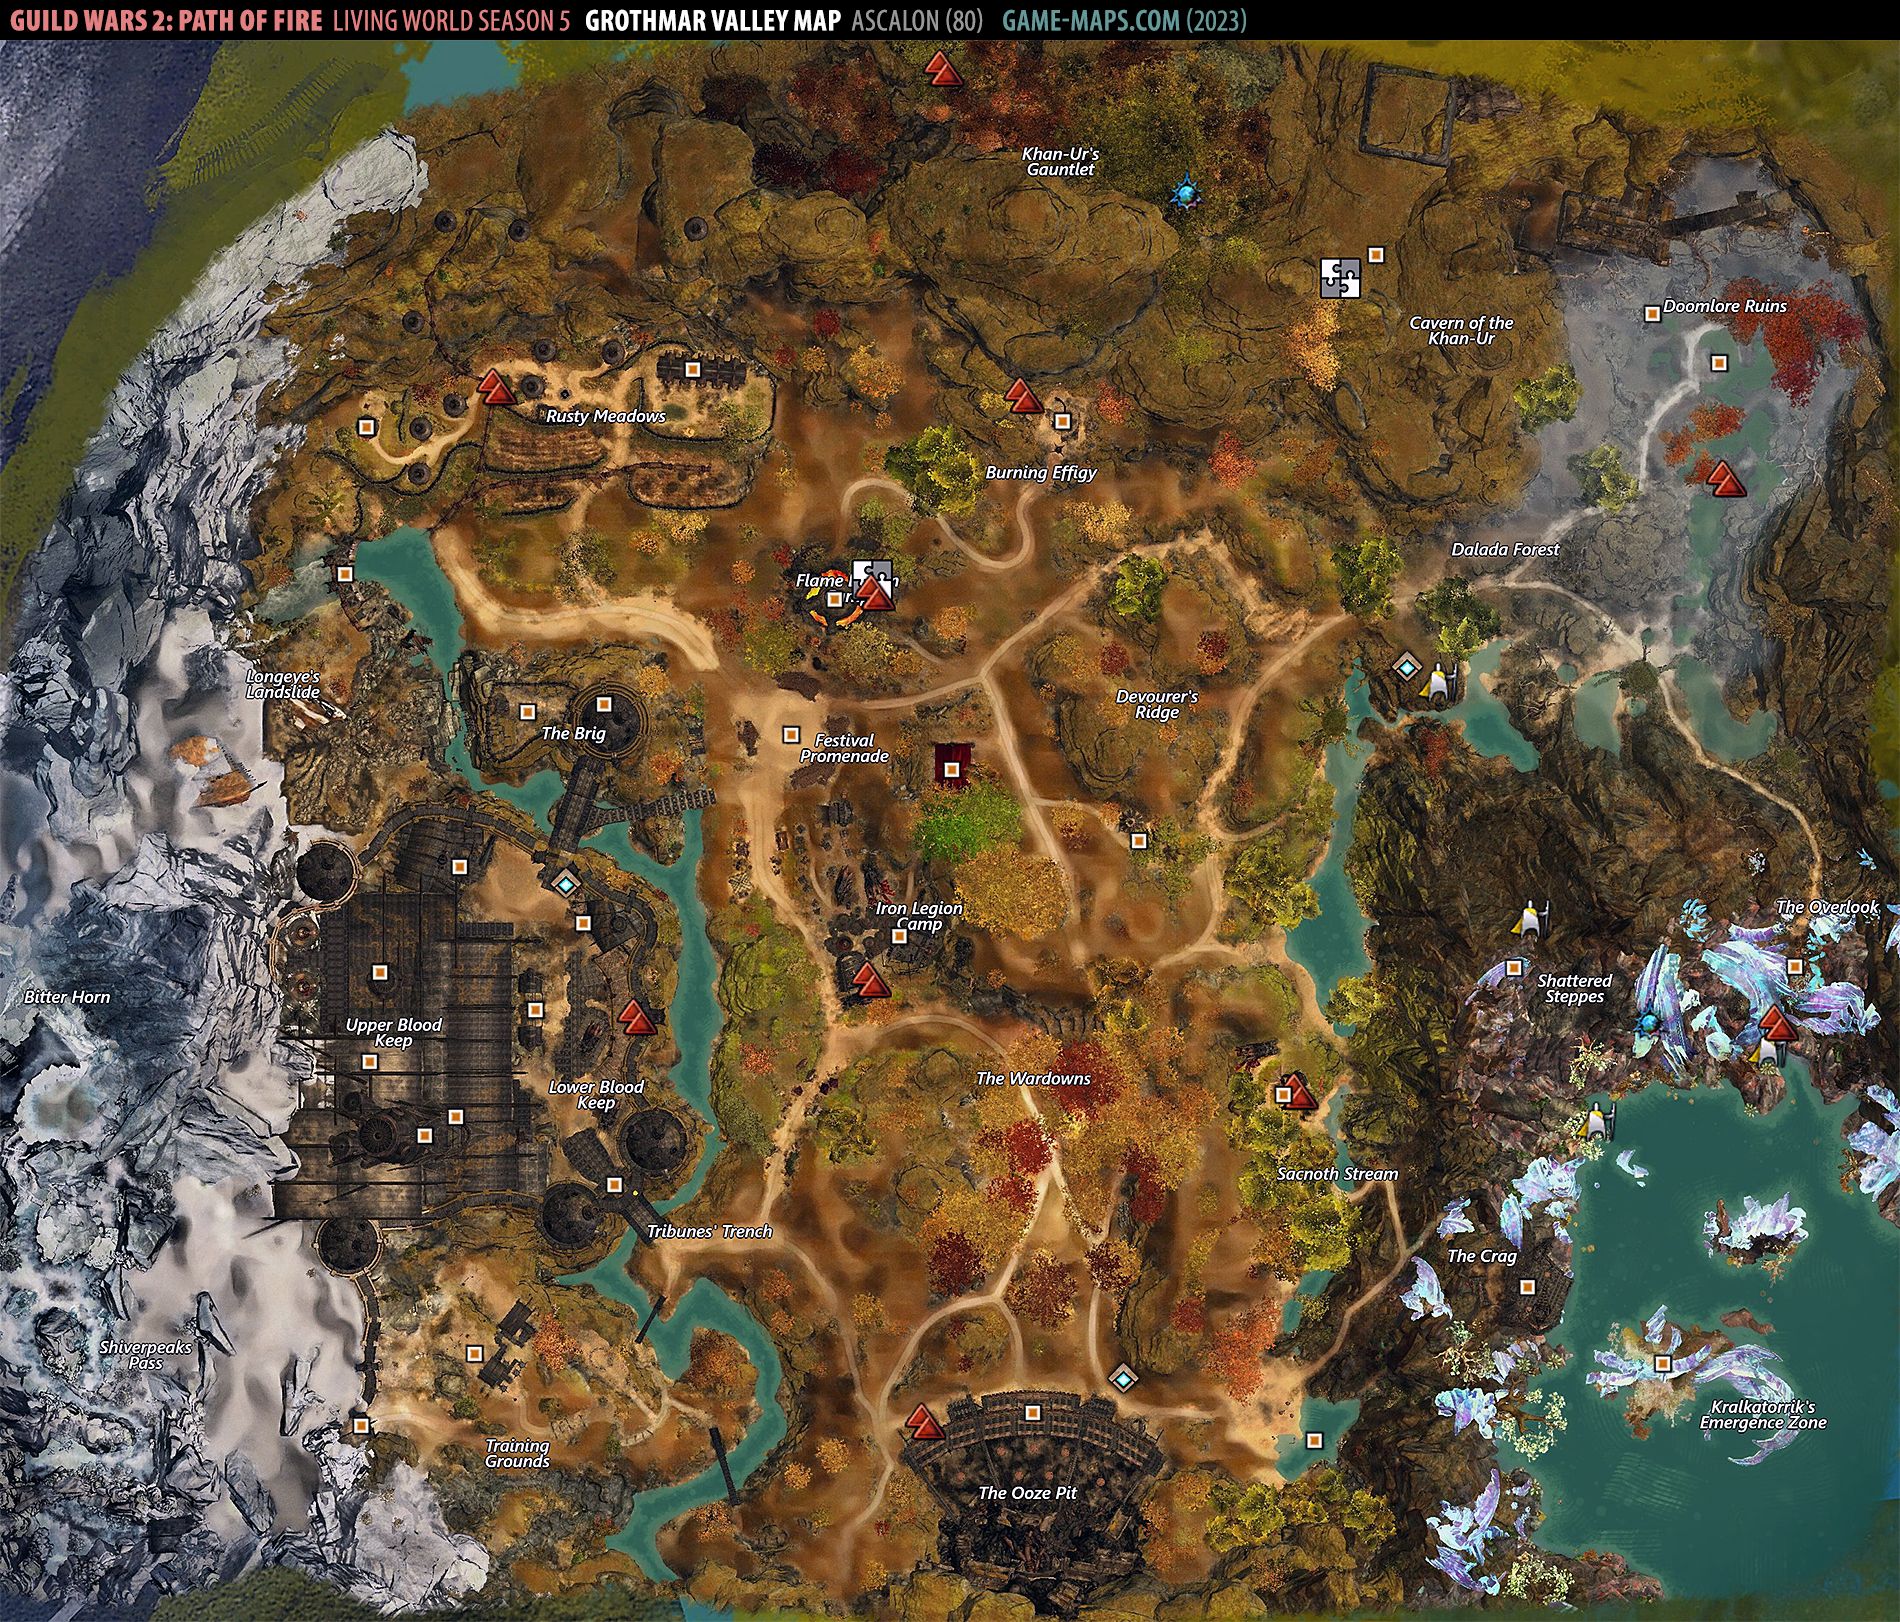 Grothmar Valley Map Guild Wars 2